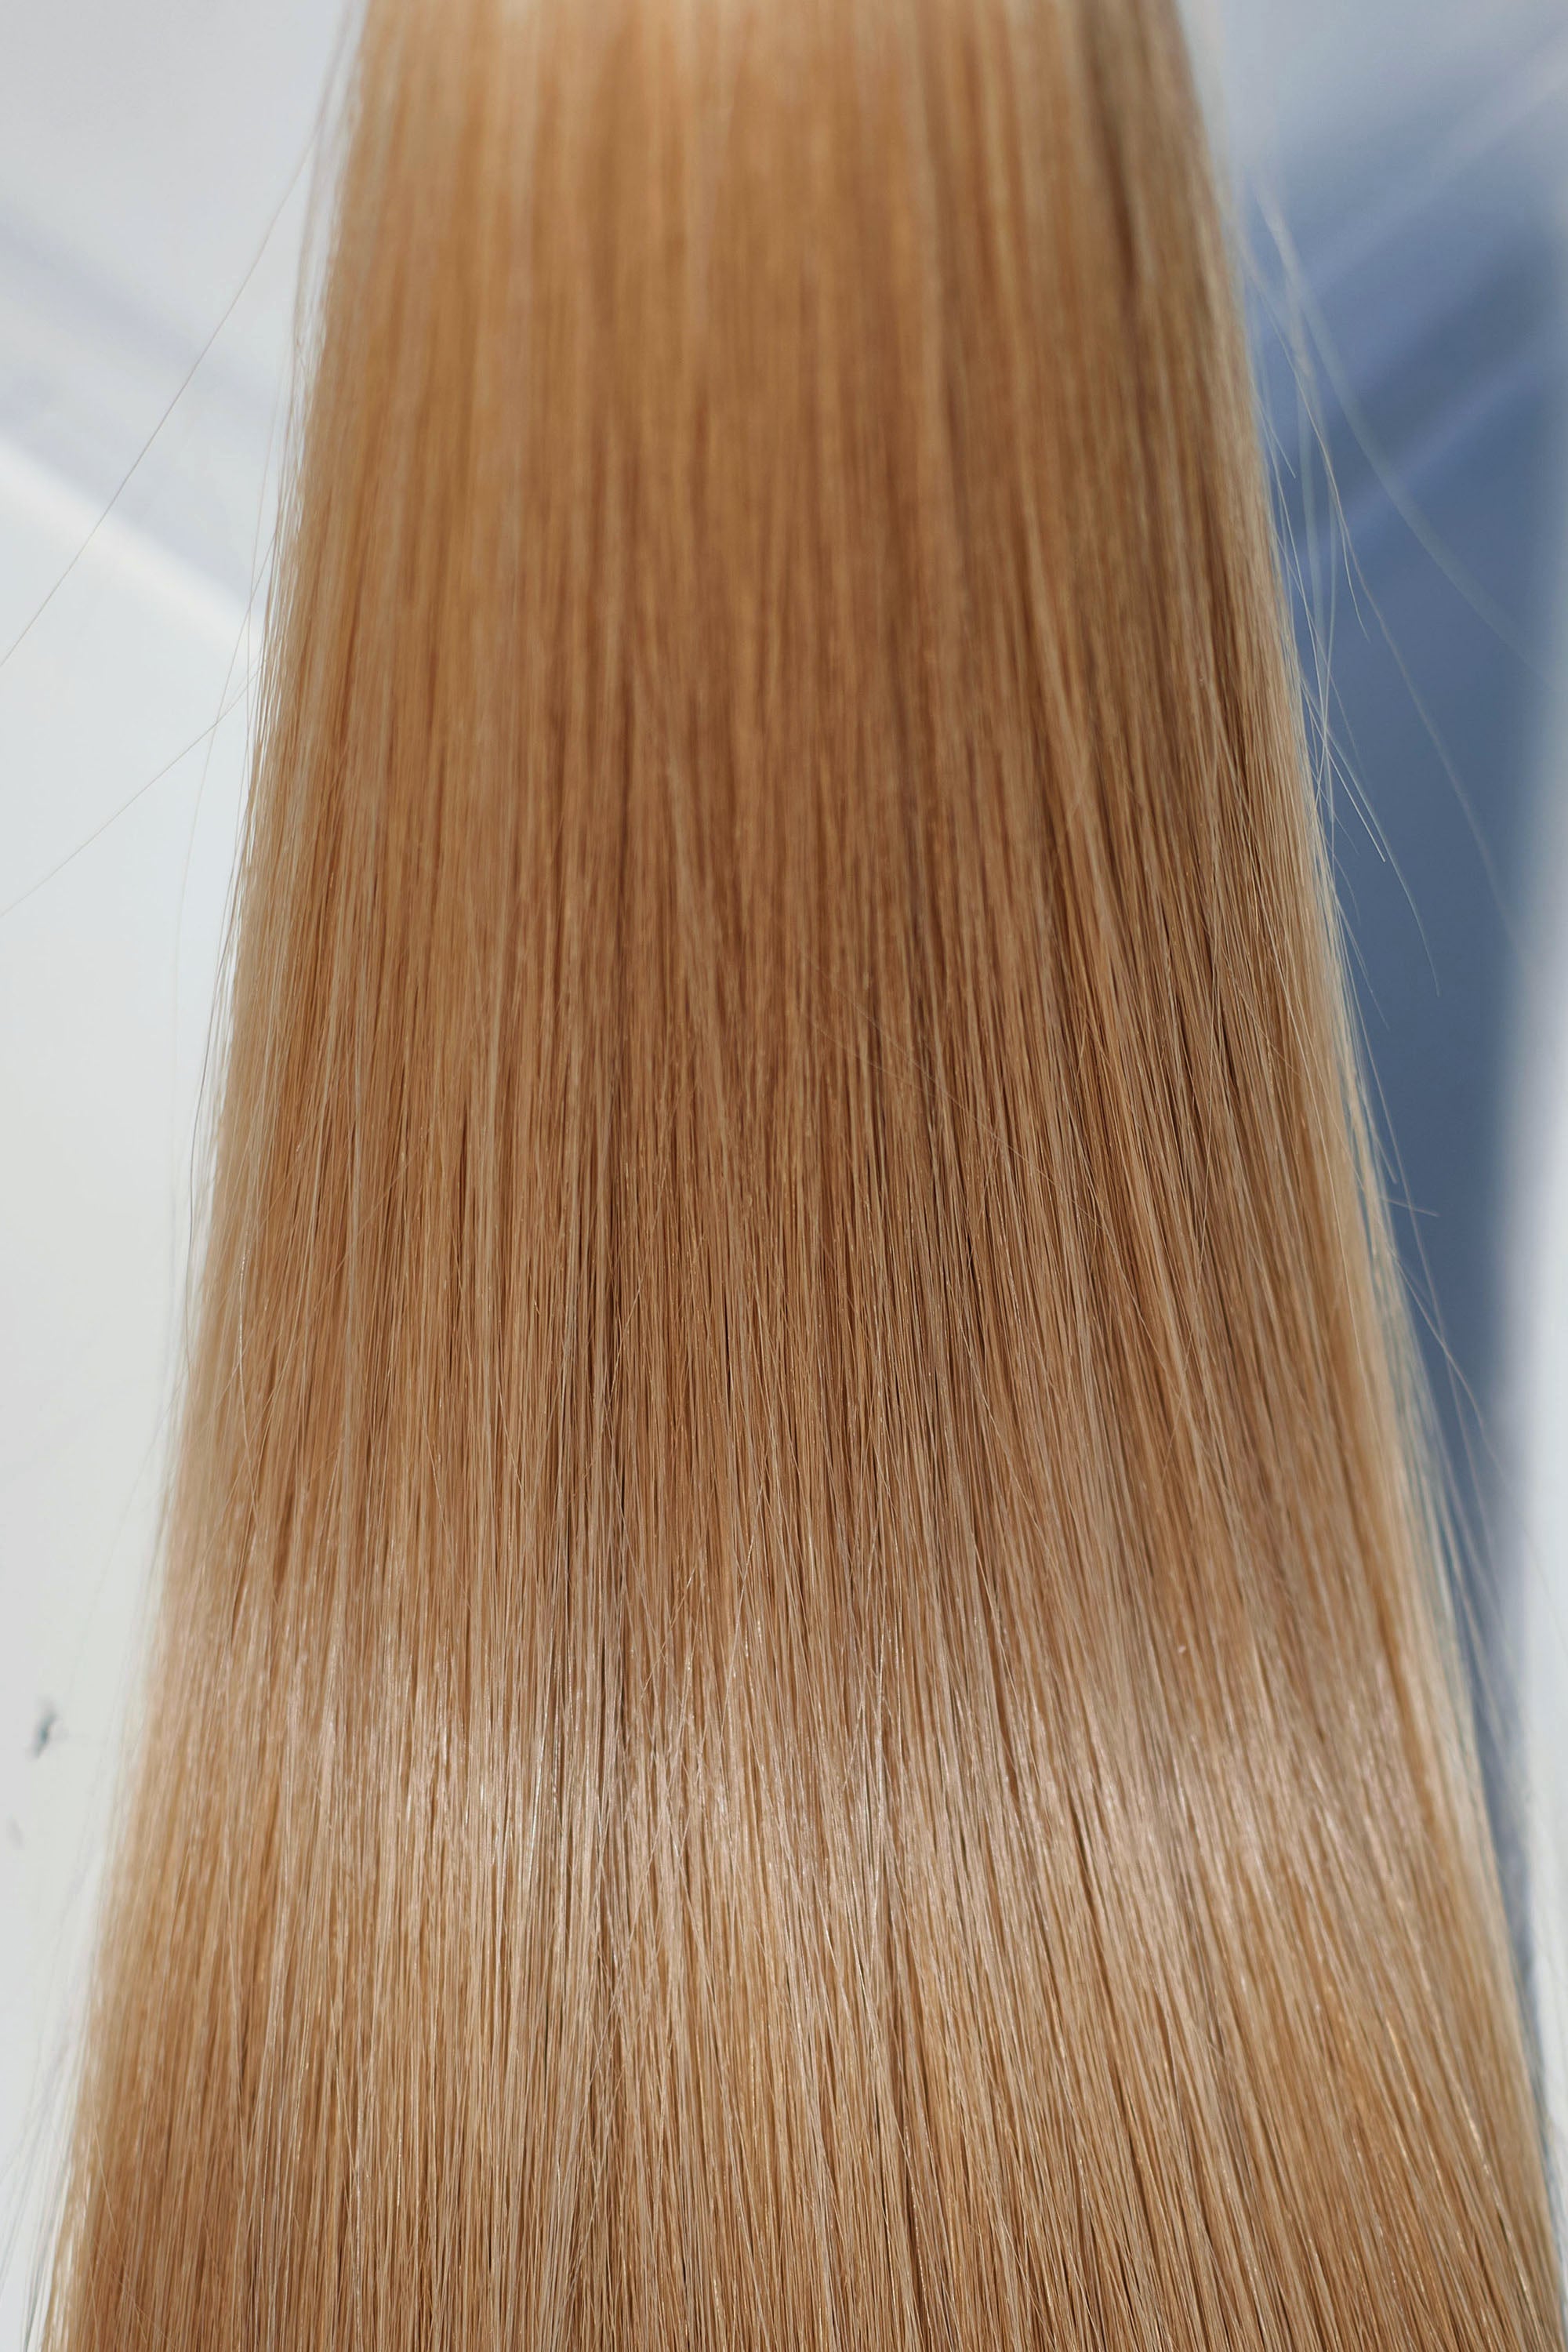 Behair professional Keratin Tip "Premium" 16" (40cm) Natural Straight Gold Sand #18 - 25g (1g each pcs) hair extensions